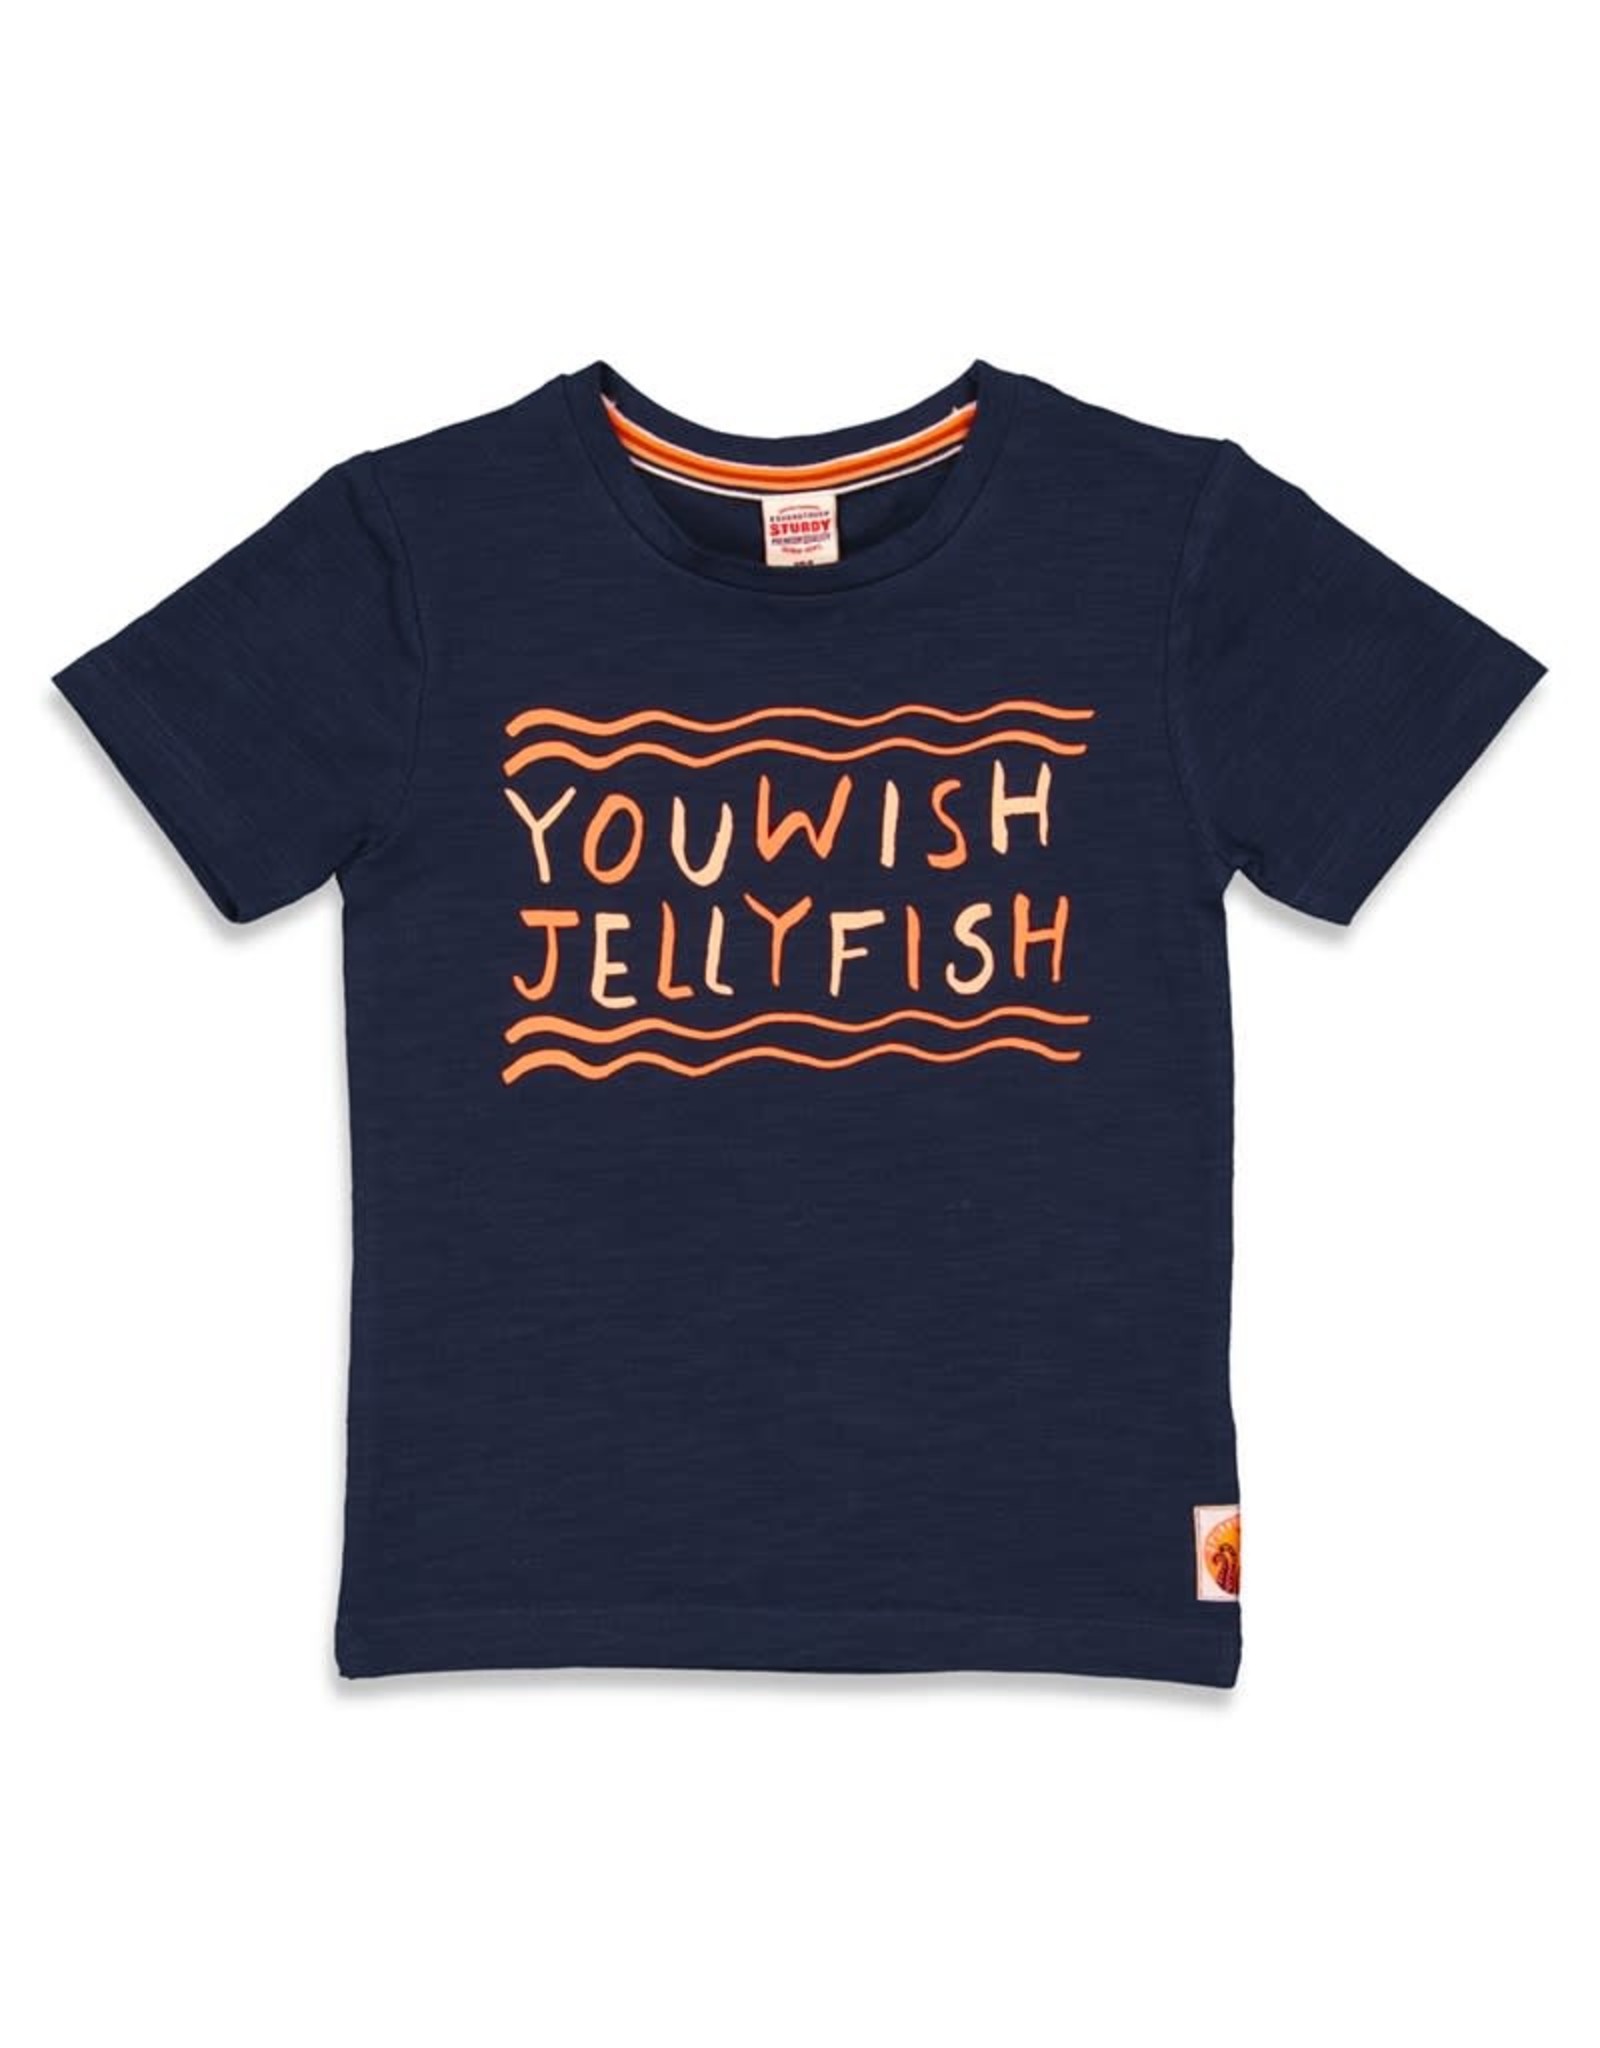 STURDY Captain ortega - T-shirt 'You wish jellyfish' - Marine